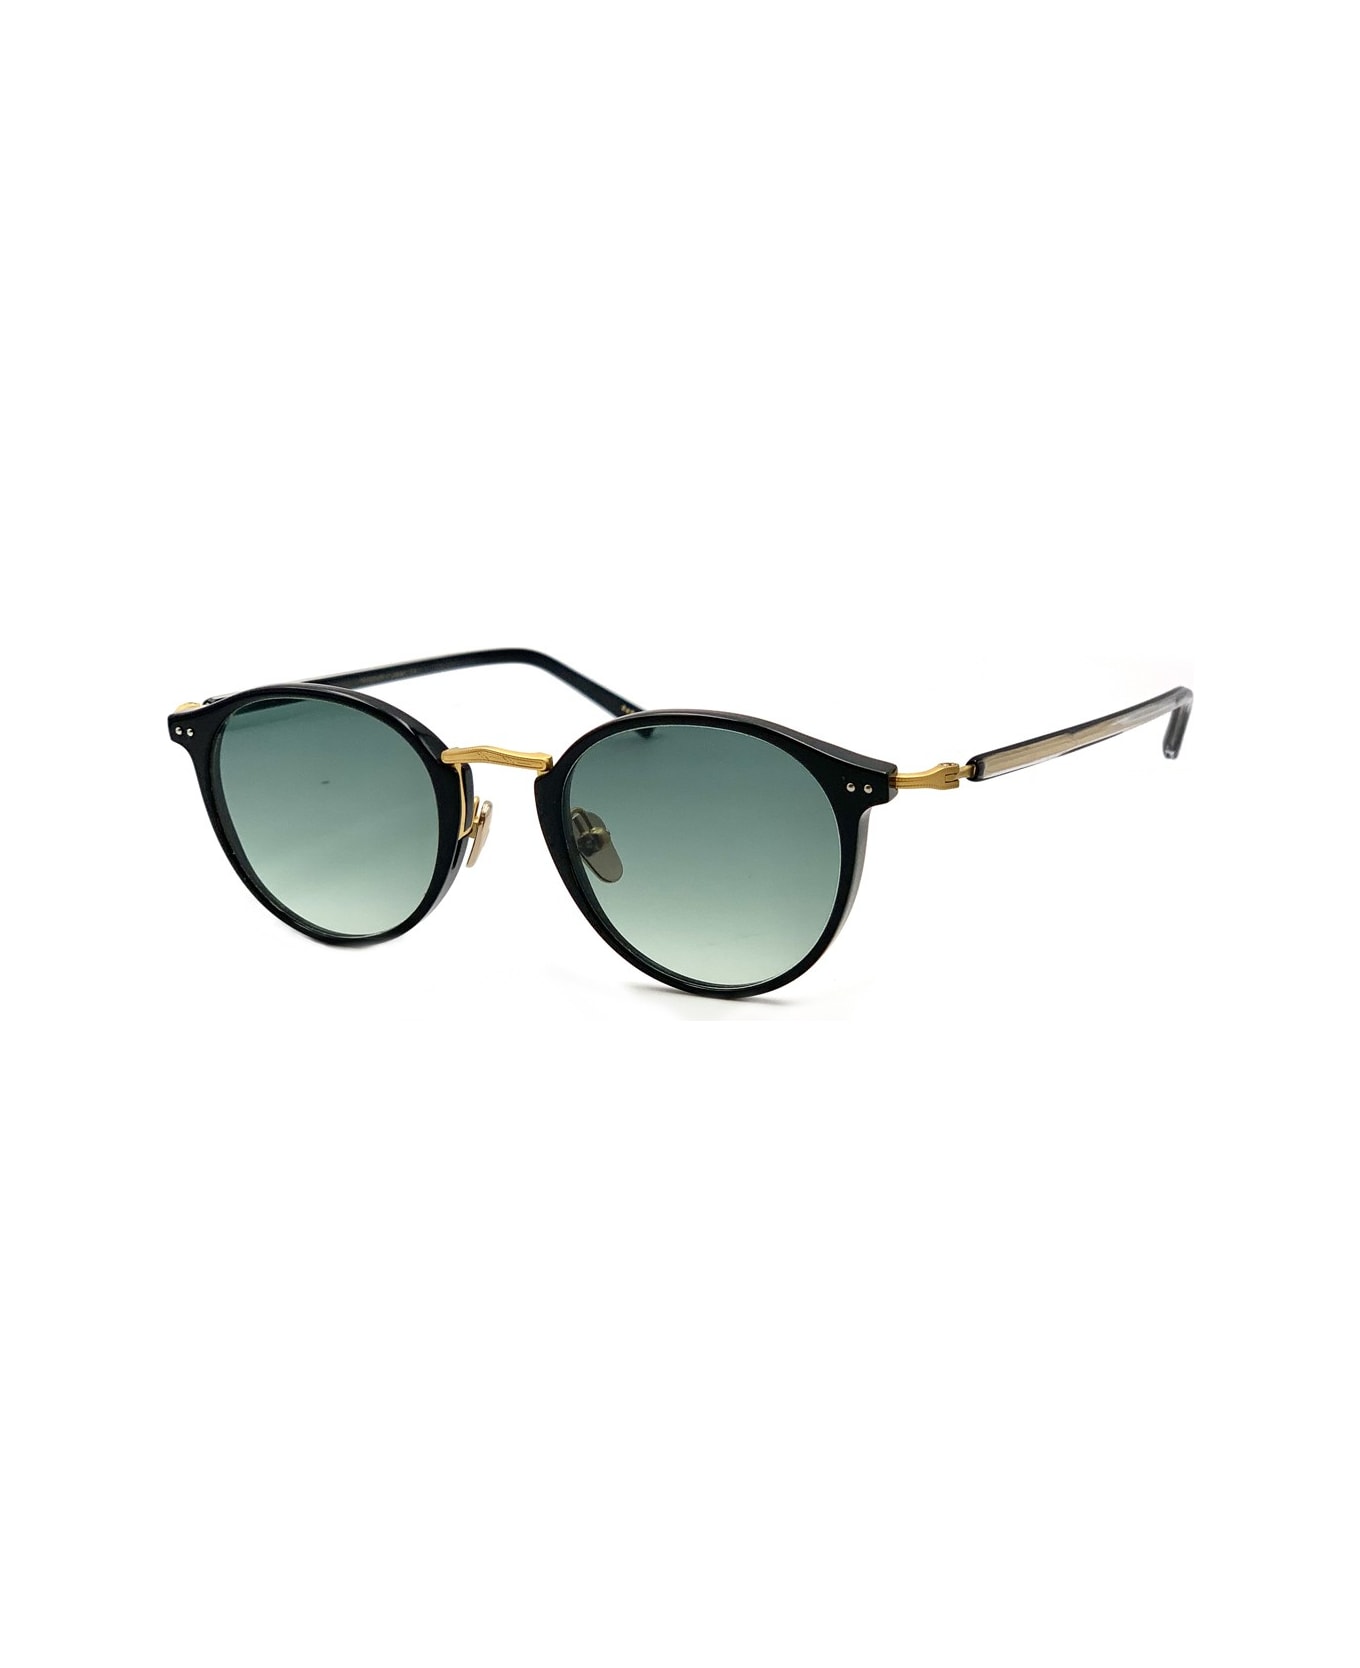 Masunaga Gms-819 Sunglasses - Nero